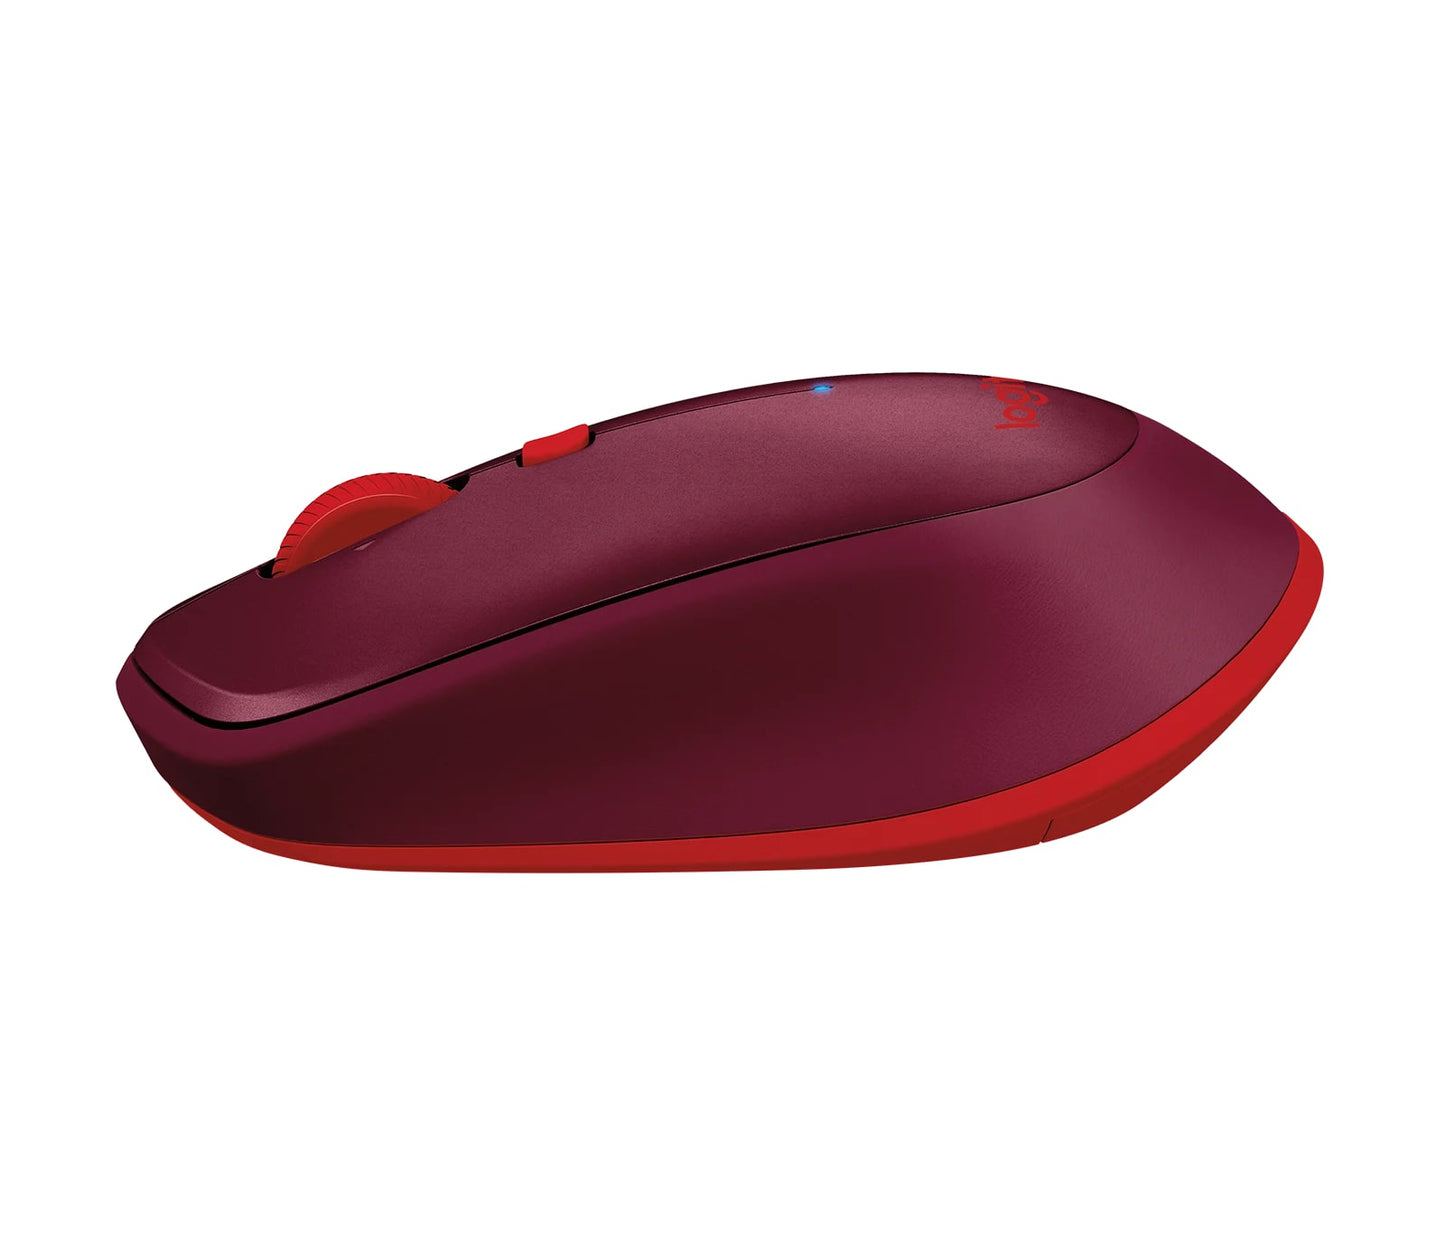 Logitech M337 Portable Bluetooth Mouse with 1000 DPI and Laser Grade Optical Sensor (Black, Blue, Red)